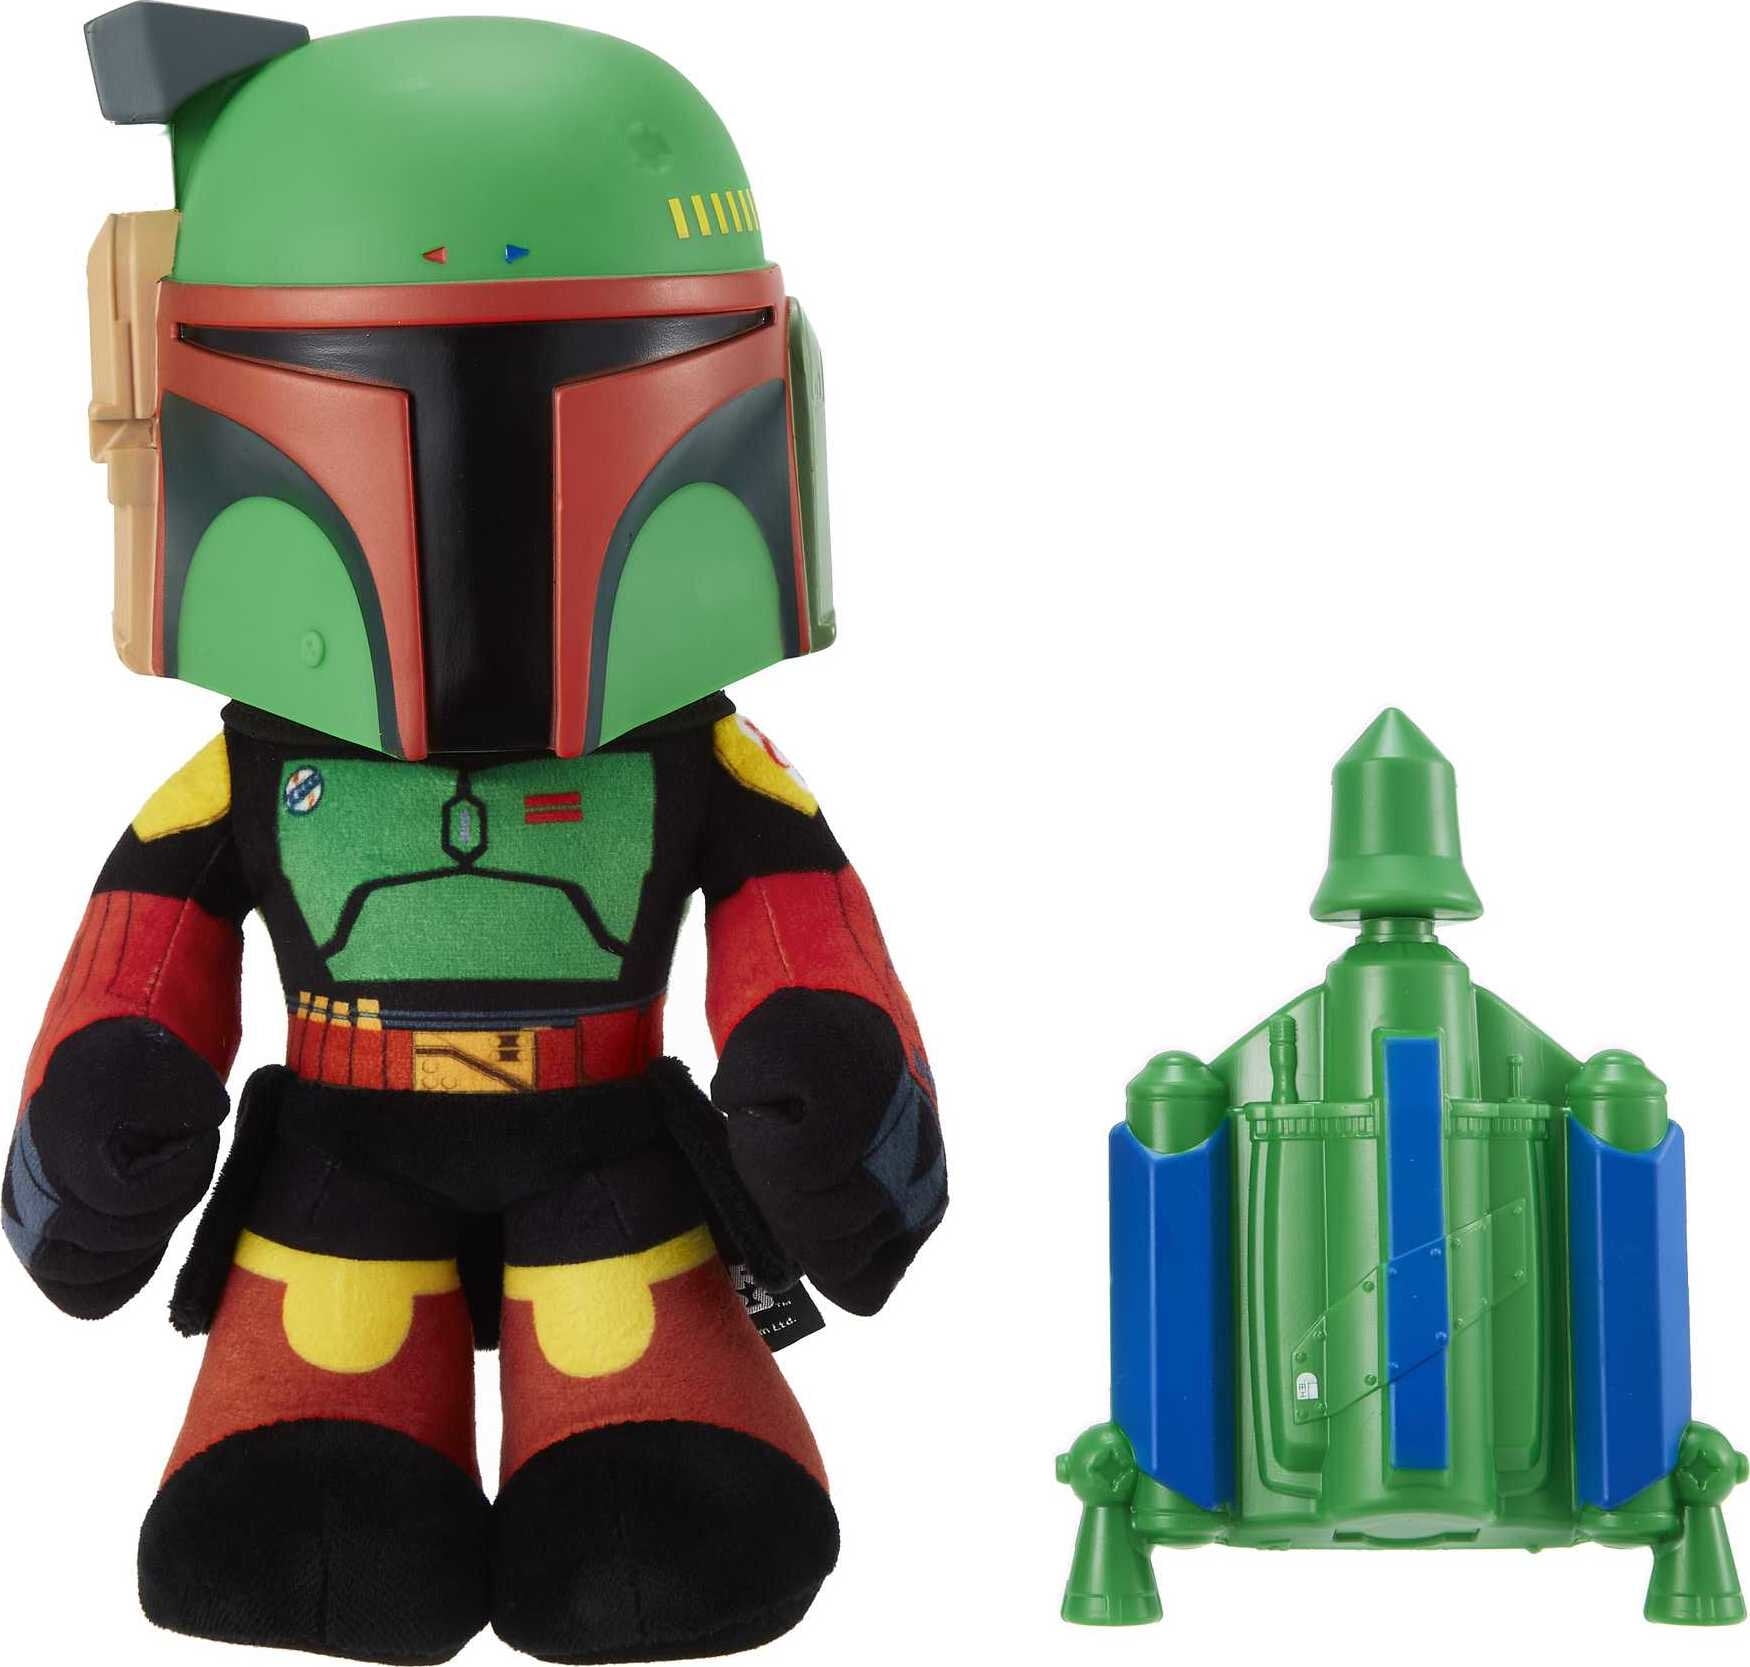 12" Star Wars Boba Fett Voice Changer Plush Toy w/ Rocket Launcher Pack $6.10 + Free S&H w/ Walmart+ or $35+